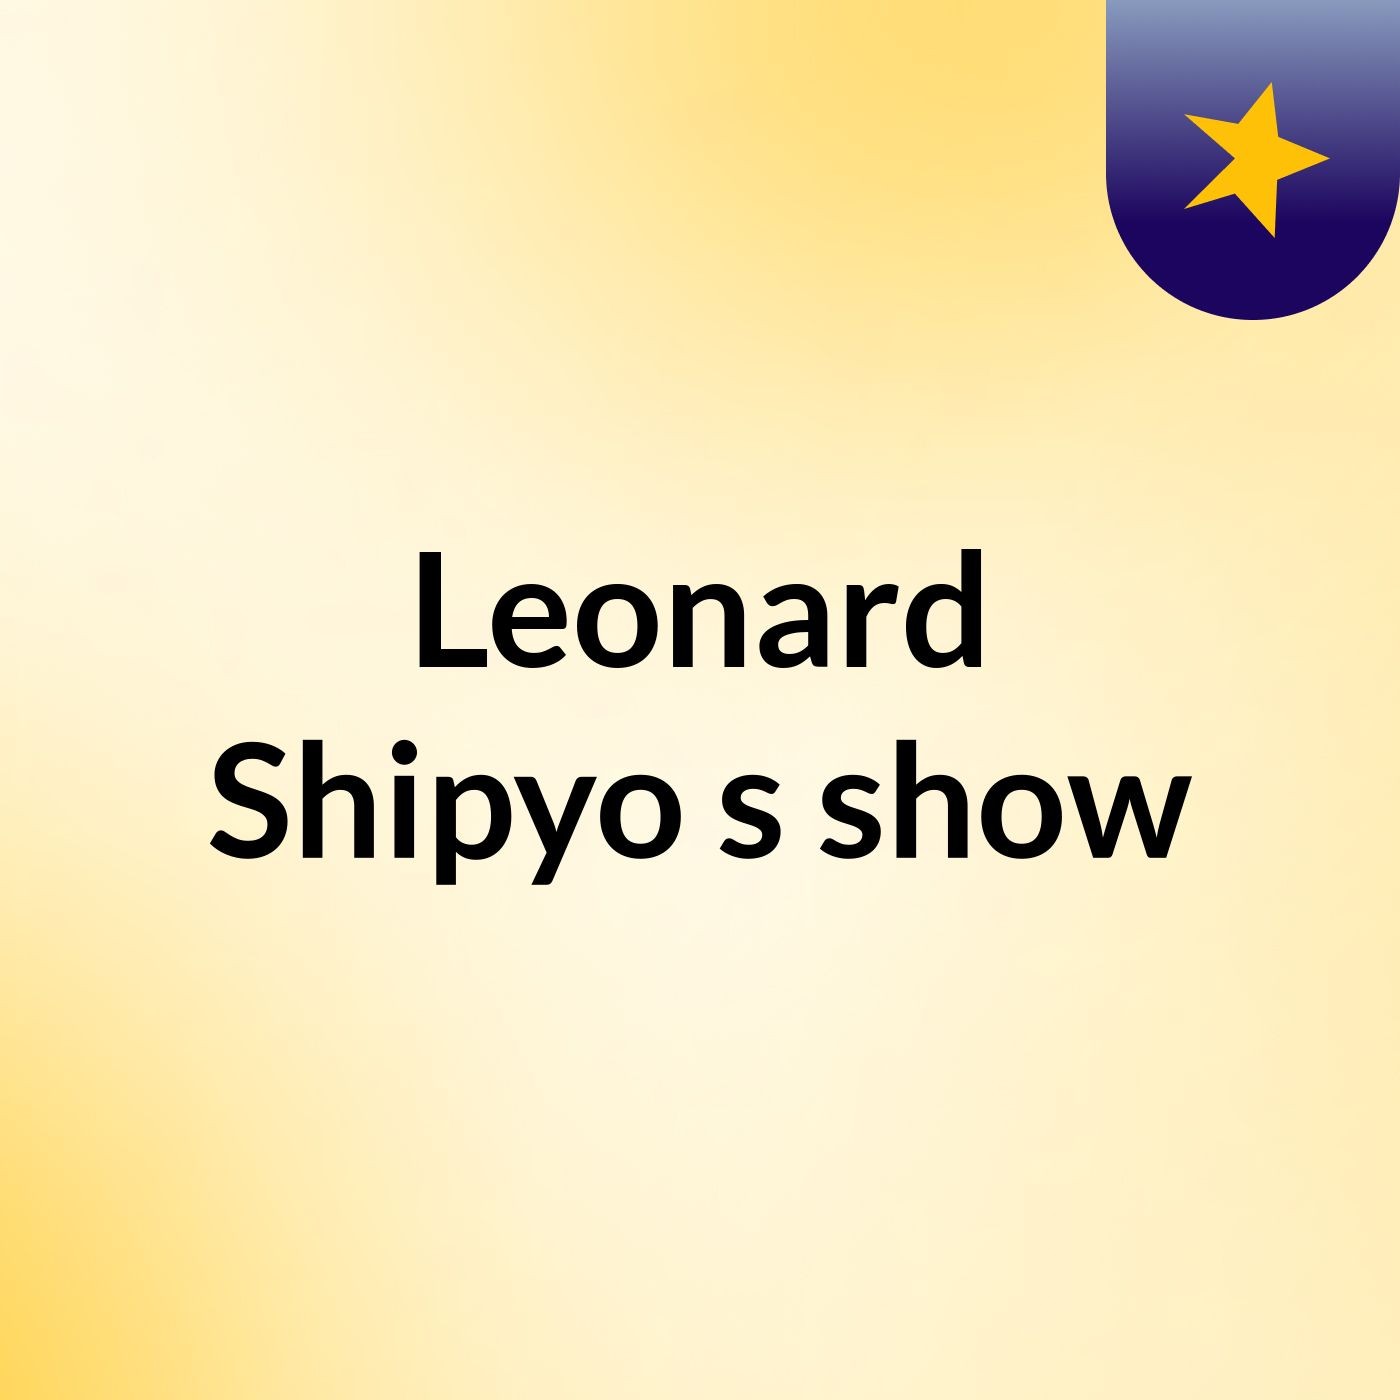 Leonard Shipyo's show